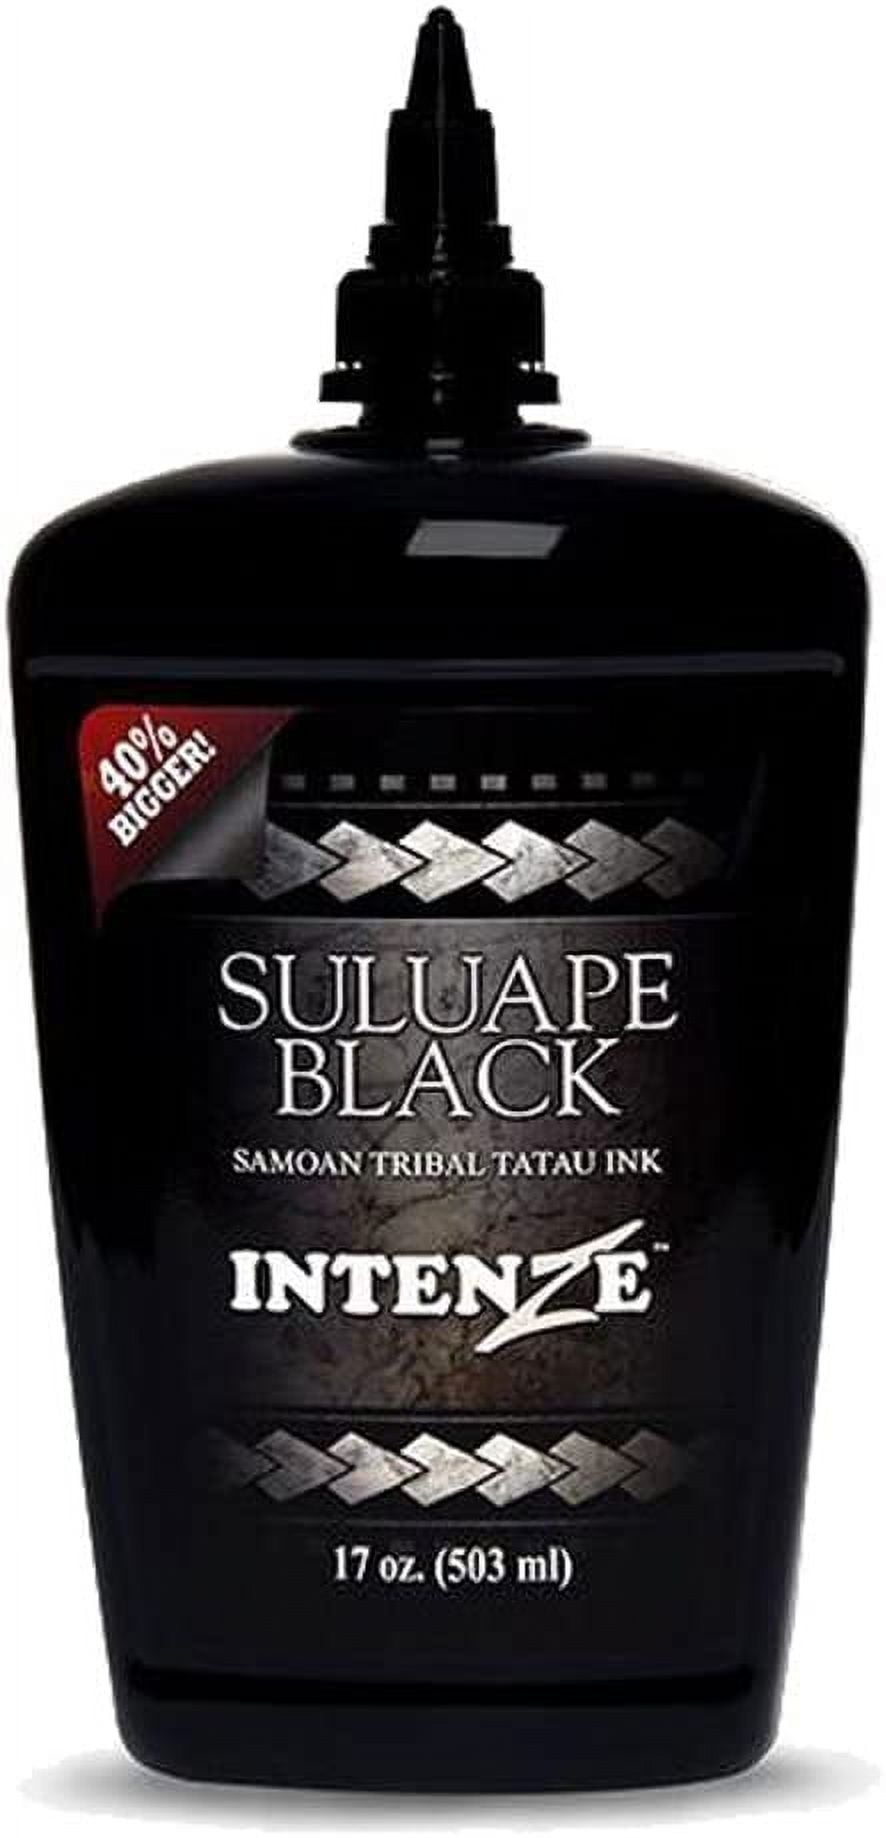 Suluape Black Samoan Tribal Tatau Ink — Intenze Tattoo Ink — 17oz Bottle 